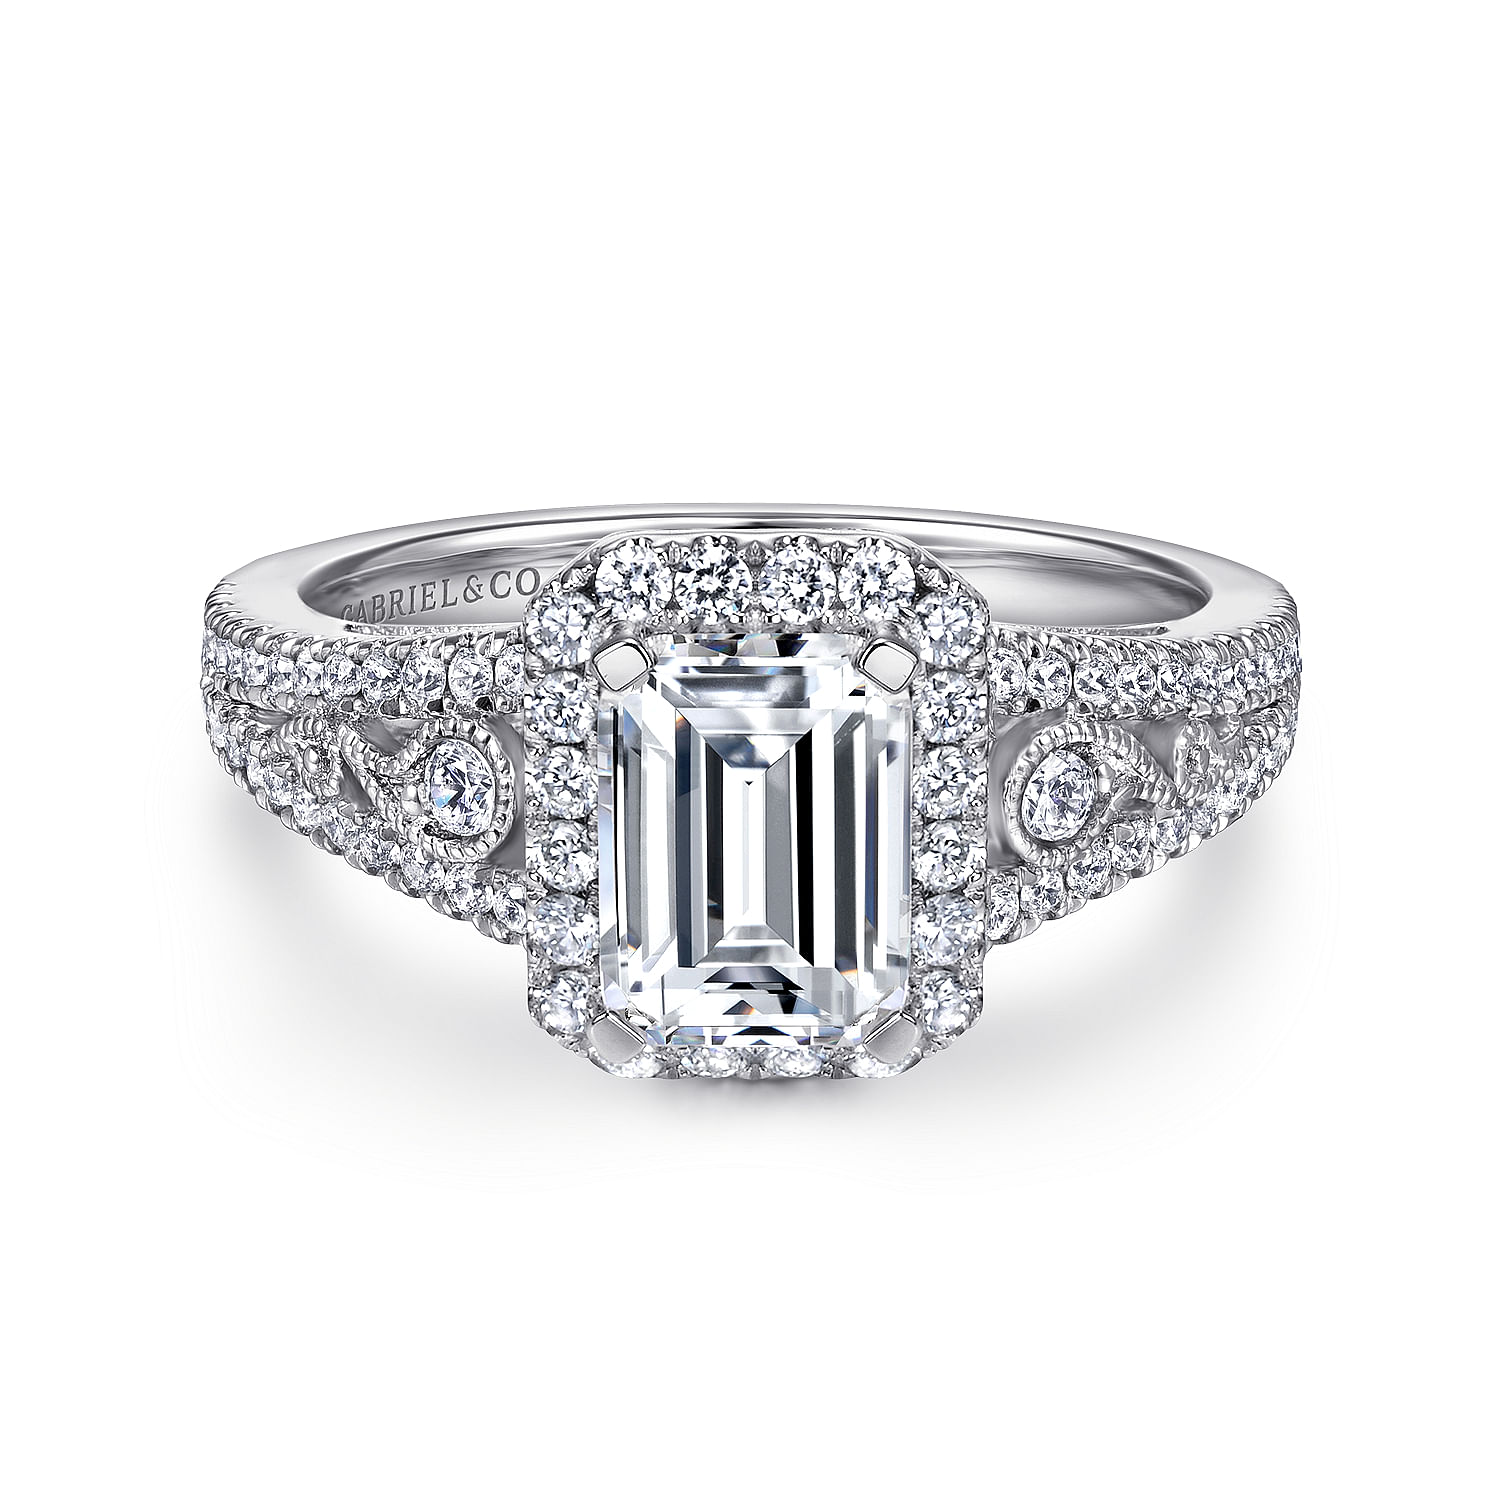 Marlena - Vintage Inspired 14K White Gold Emerald Halo Diamond Engagement Ring